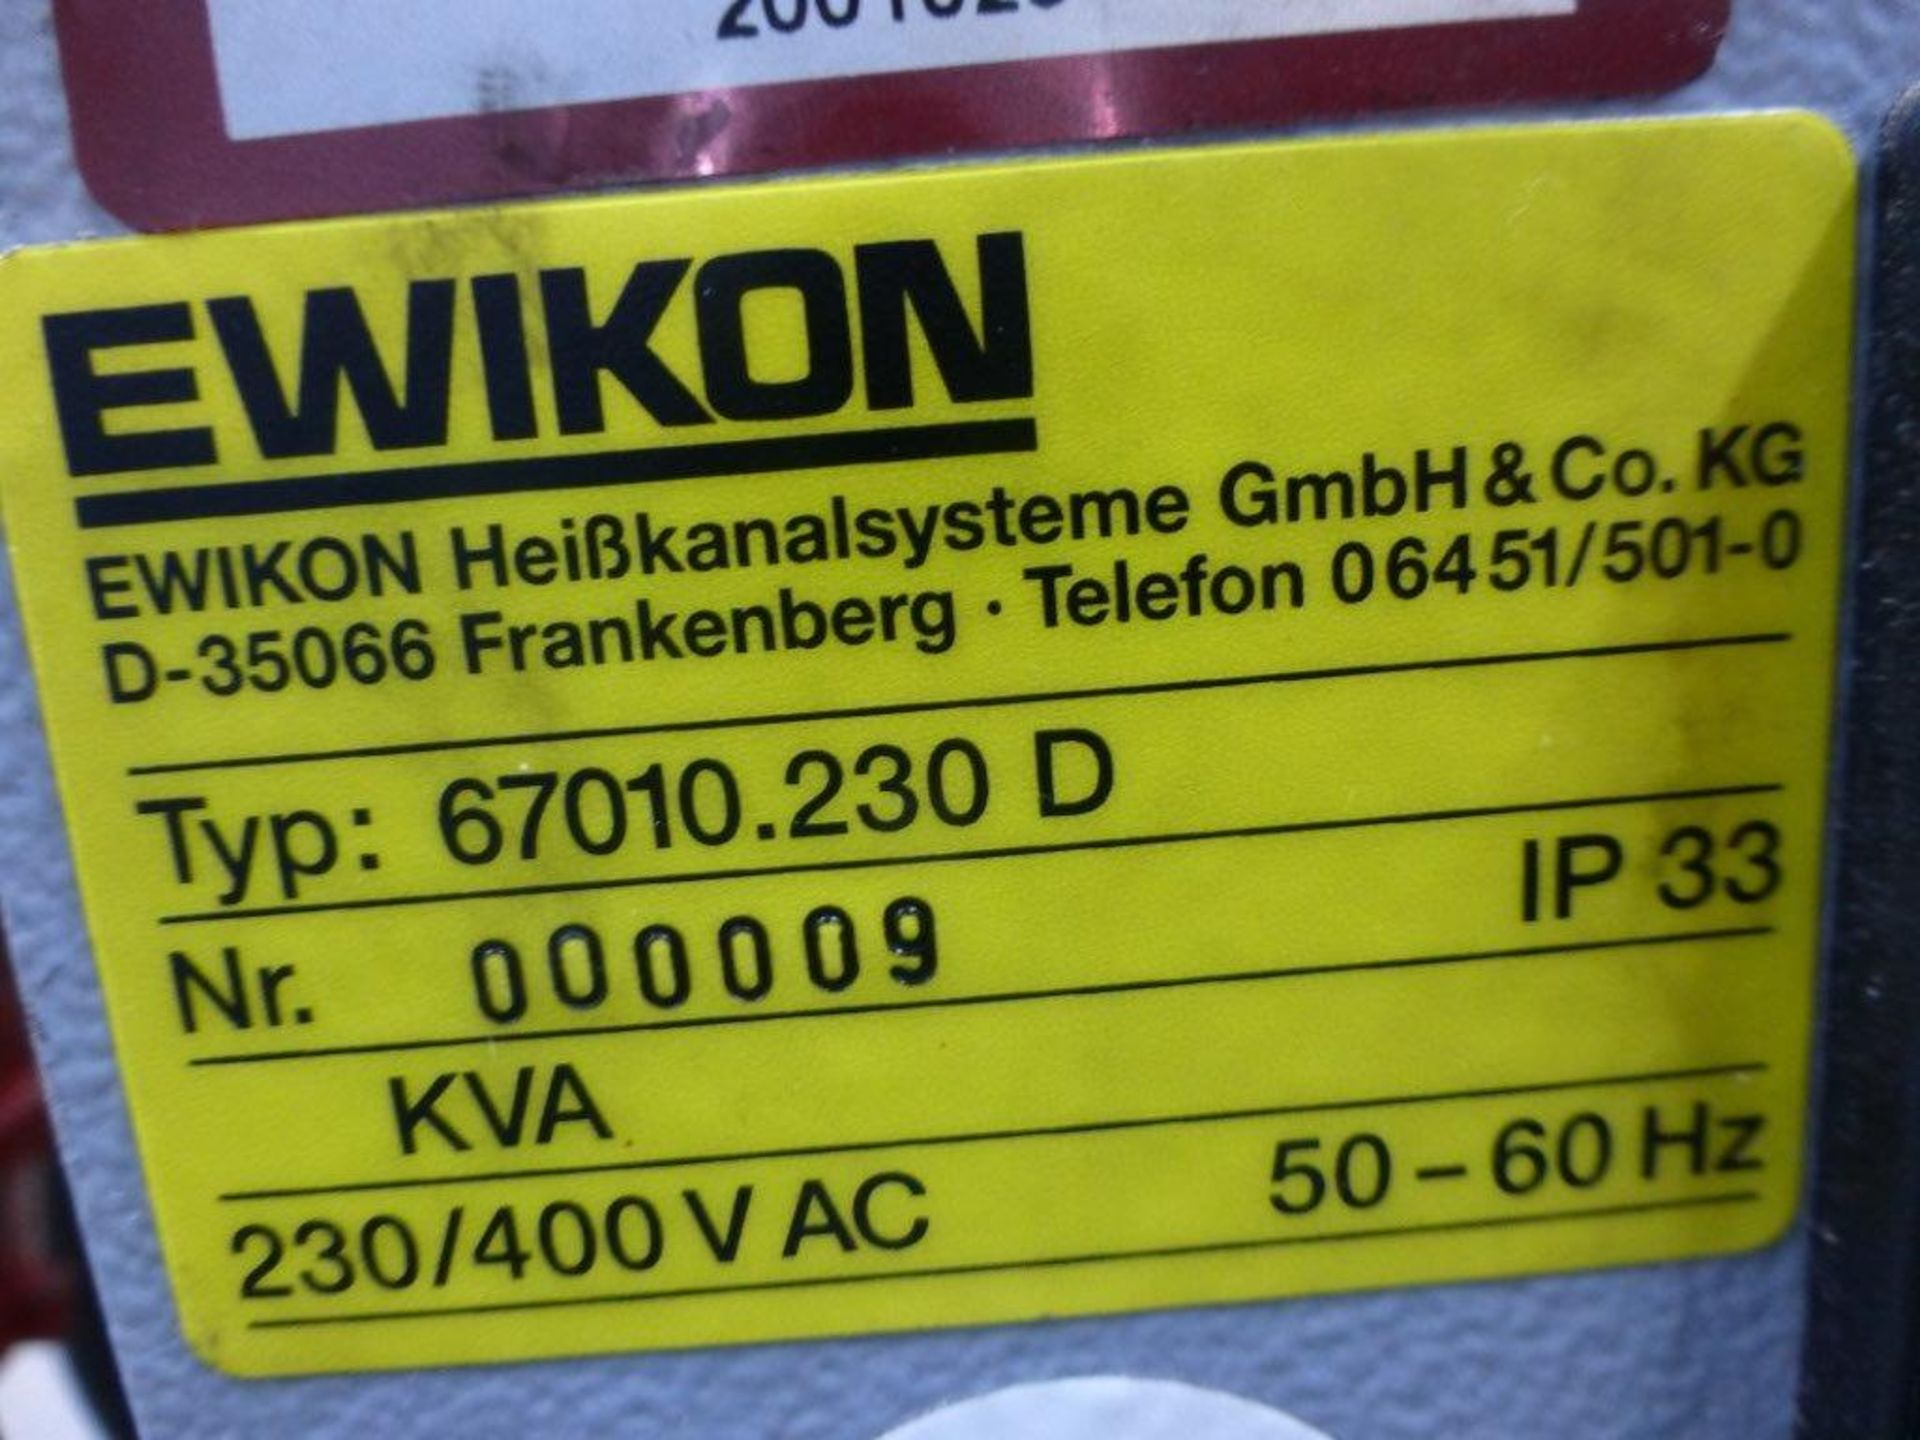 Ewikon 67010.320D temperature controller, Serial No 000009 - Bild 2 aus 2